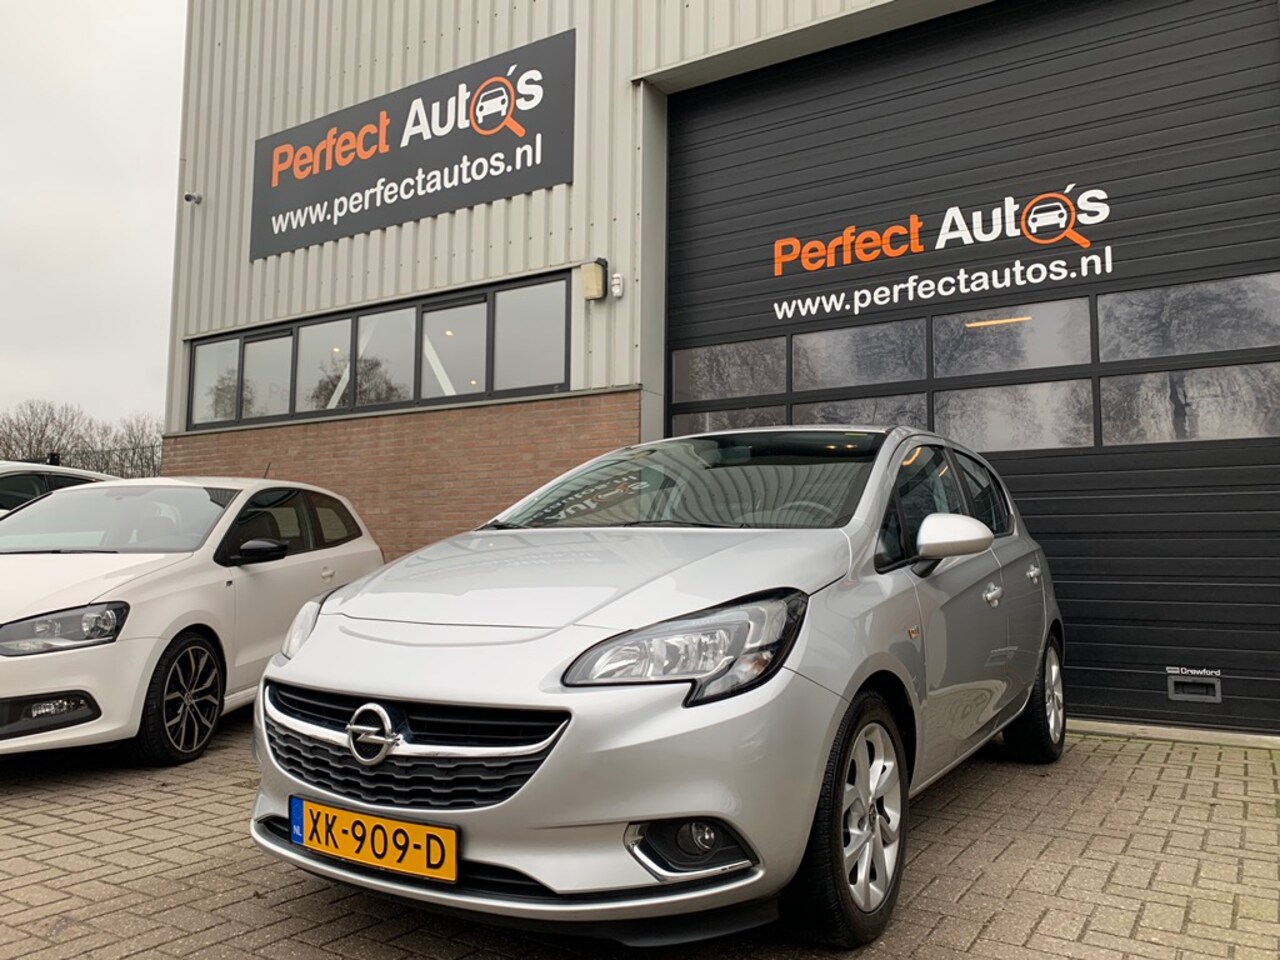 Opel Corsa 1 3 Cdti Innovation Navigatie Cruise Control Pdc 16 Diesel Occasion Te Koop Op Autowereld Nl